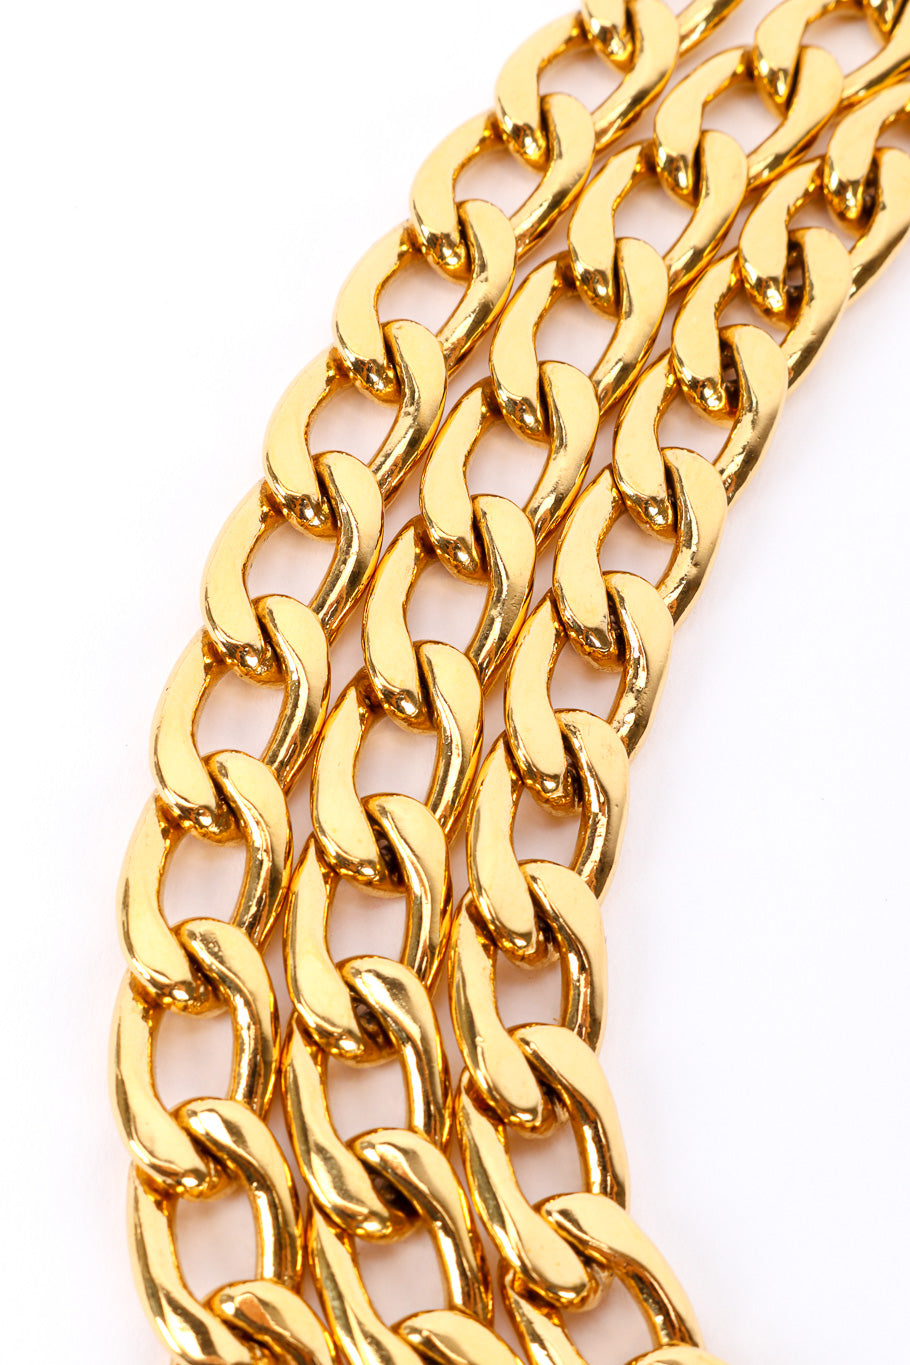 Vintage Chanel Draped Chain Belt chain link closeup on white backdrop @Recessla